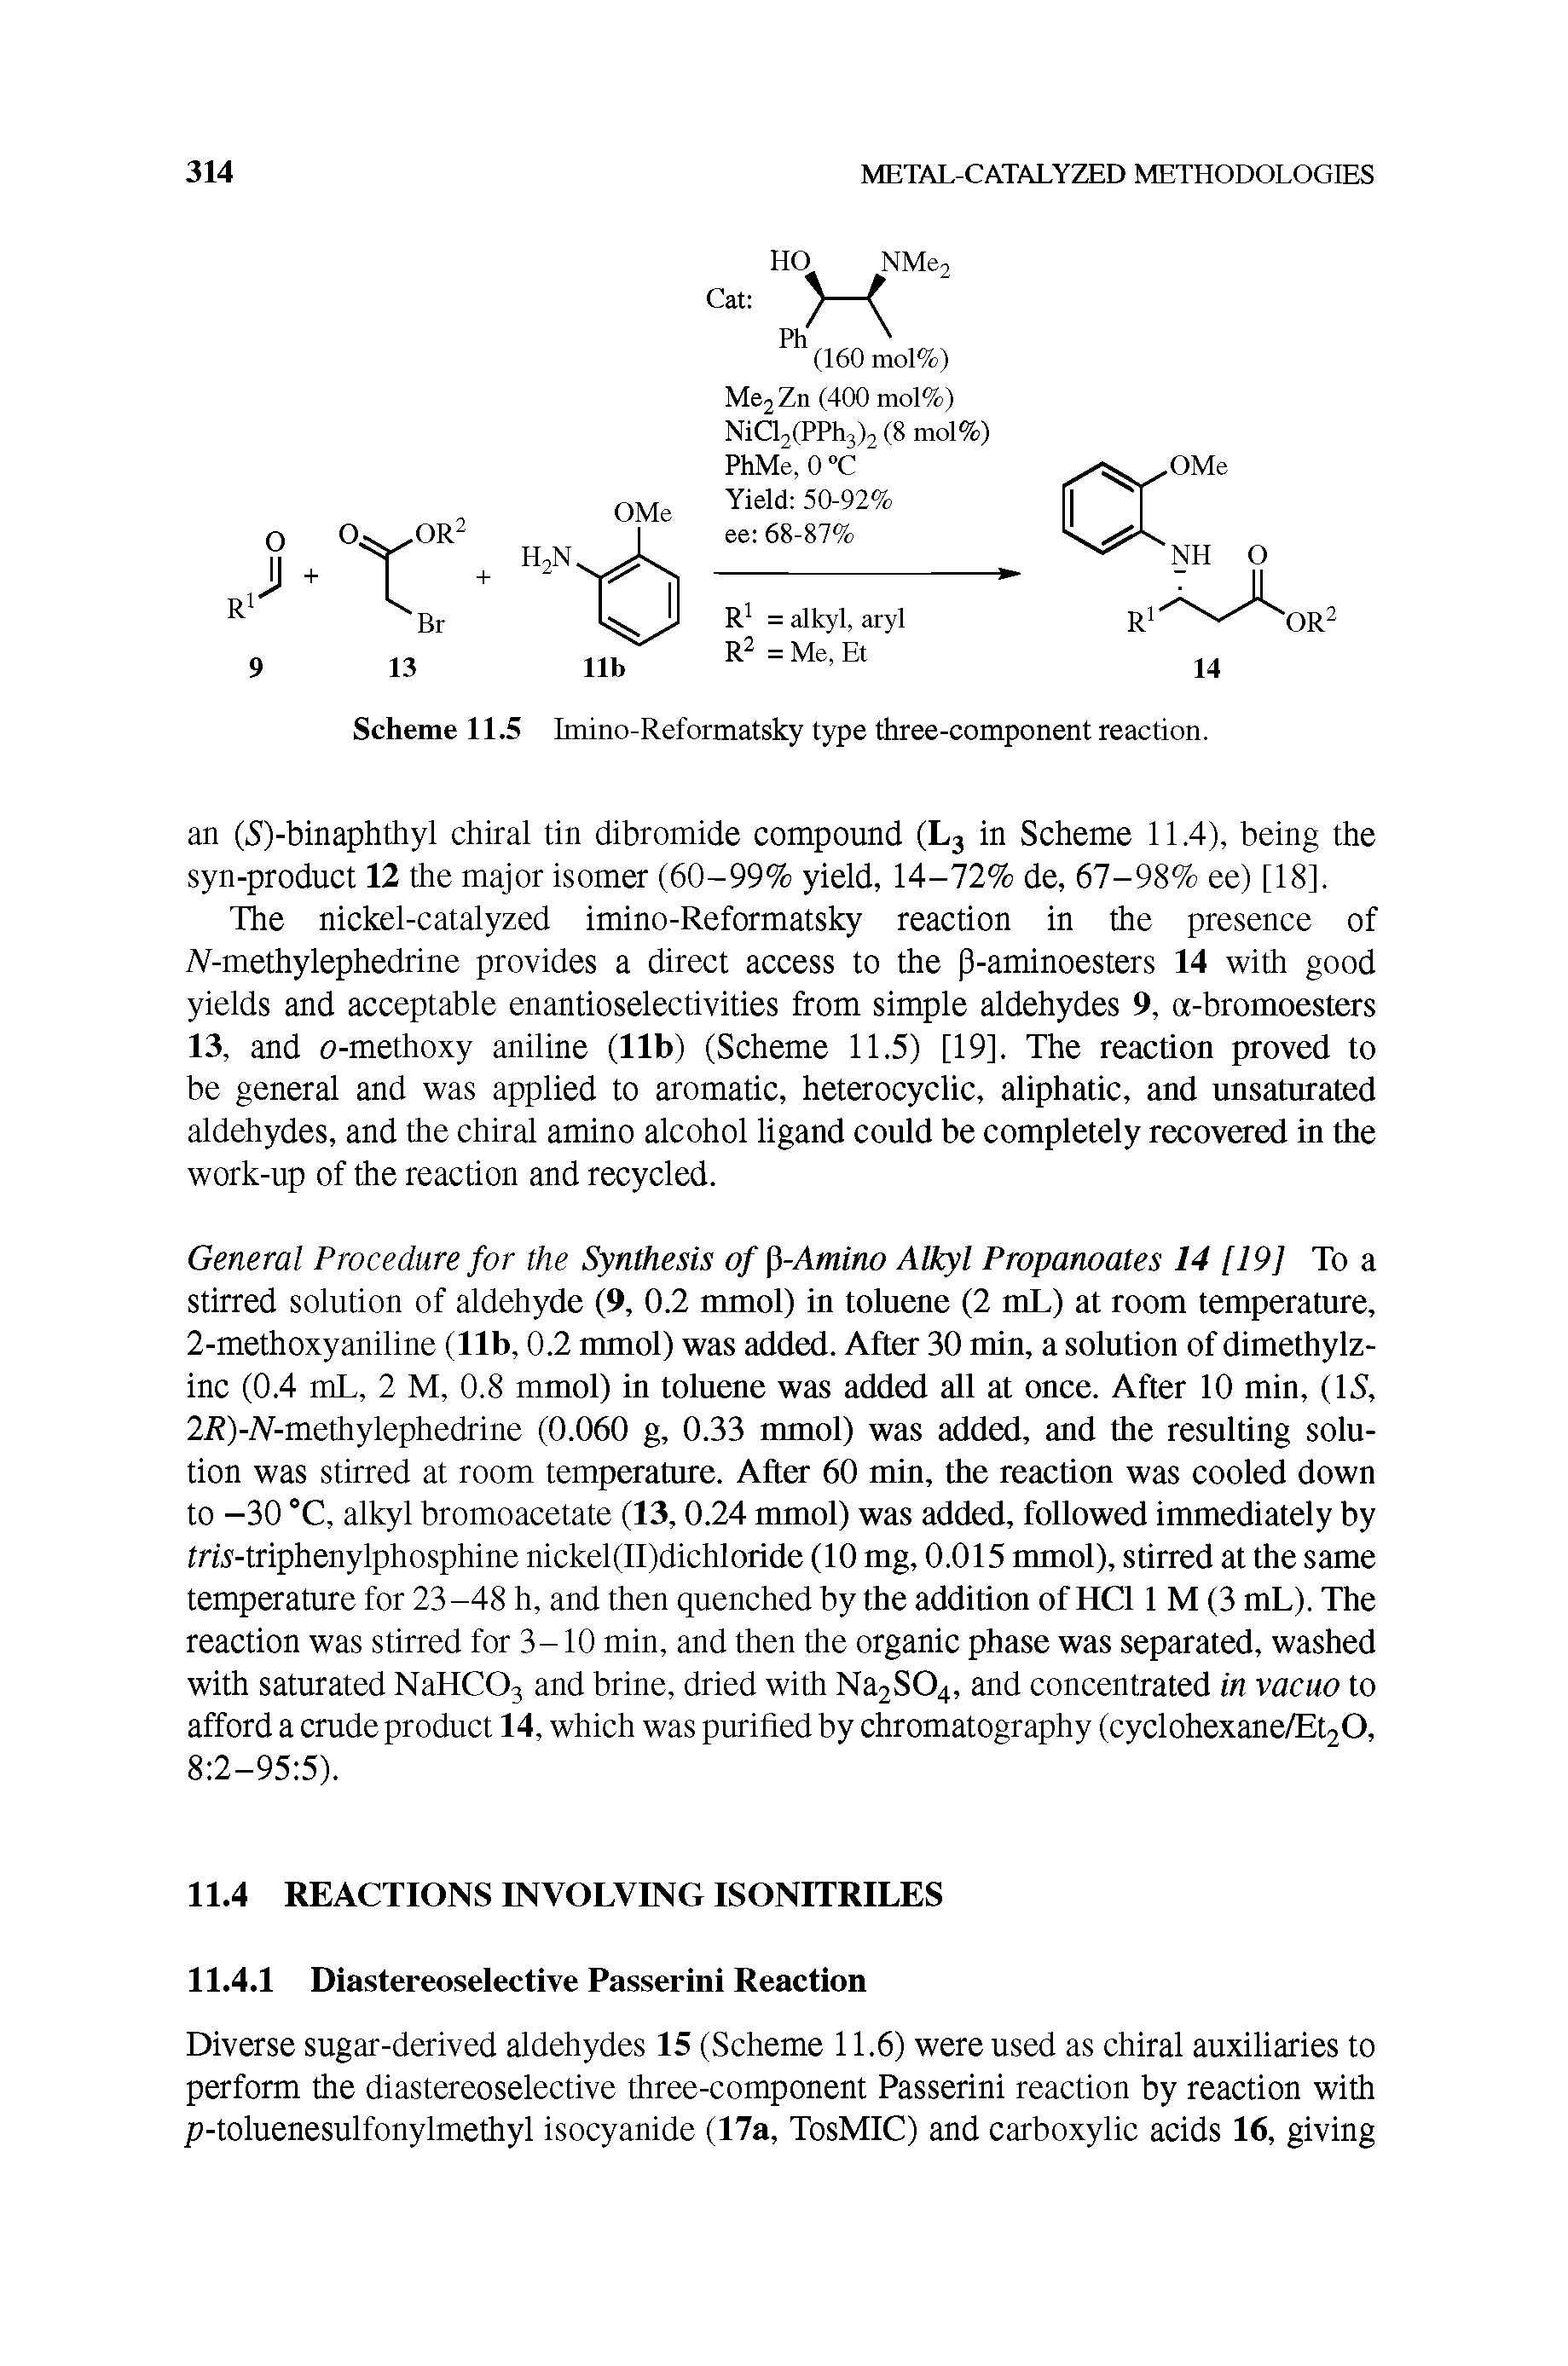 Scheme 11.5 Imino-Reformatsky type three-component reaction.